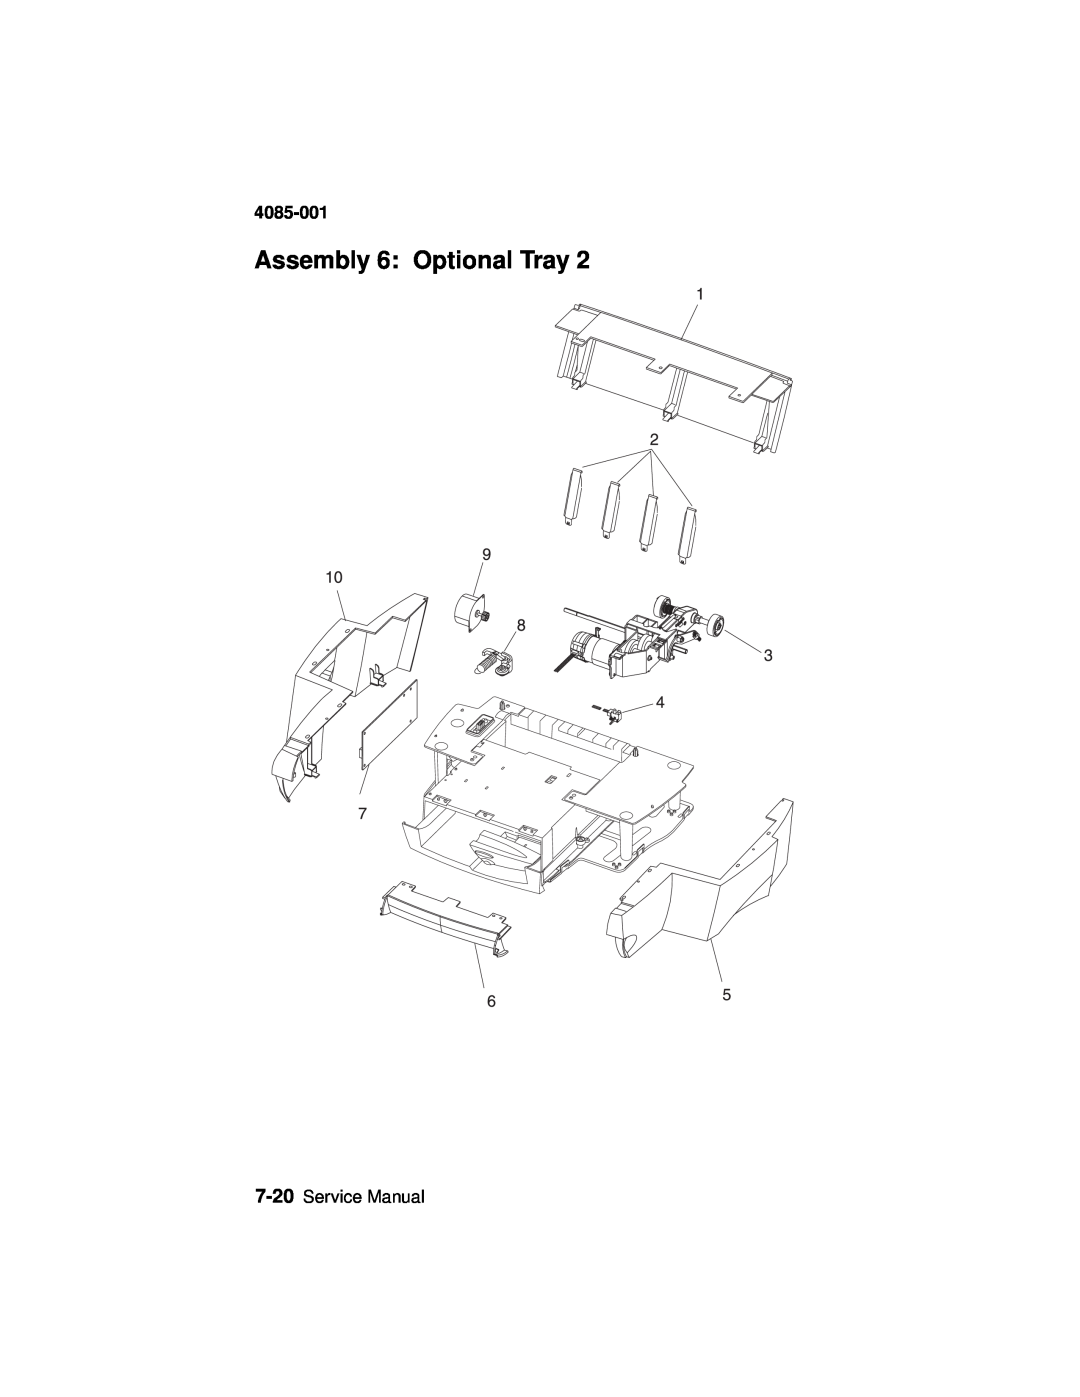 Lexmark J110, Printer manual Assembly 6: Optional Tray, 4085-001, Service Manual 